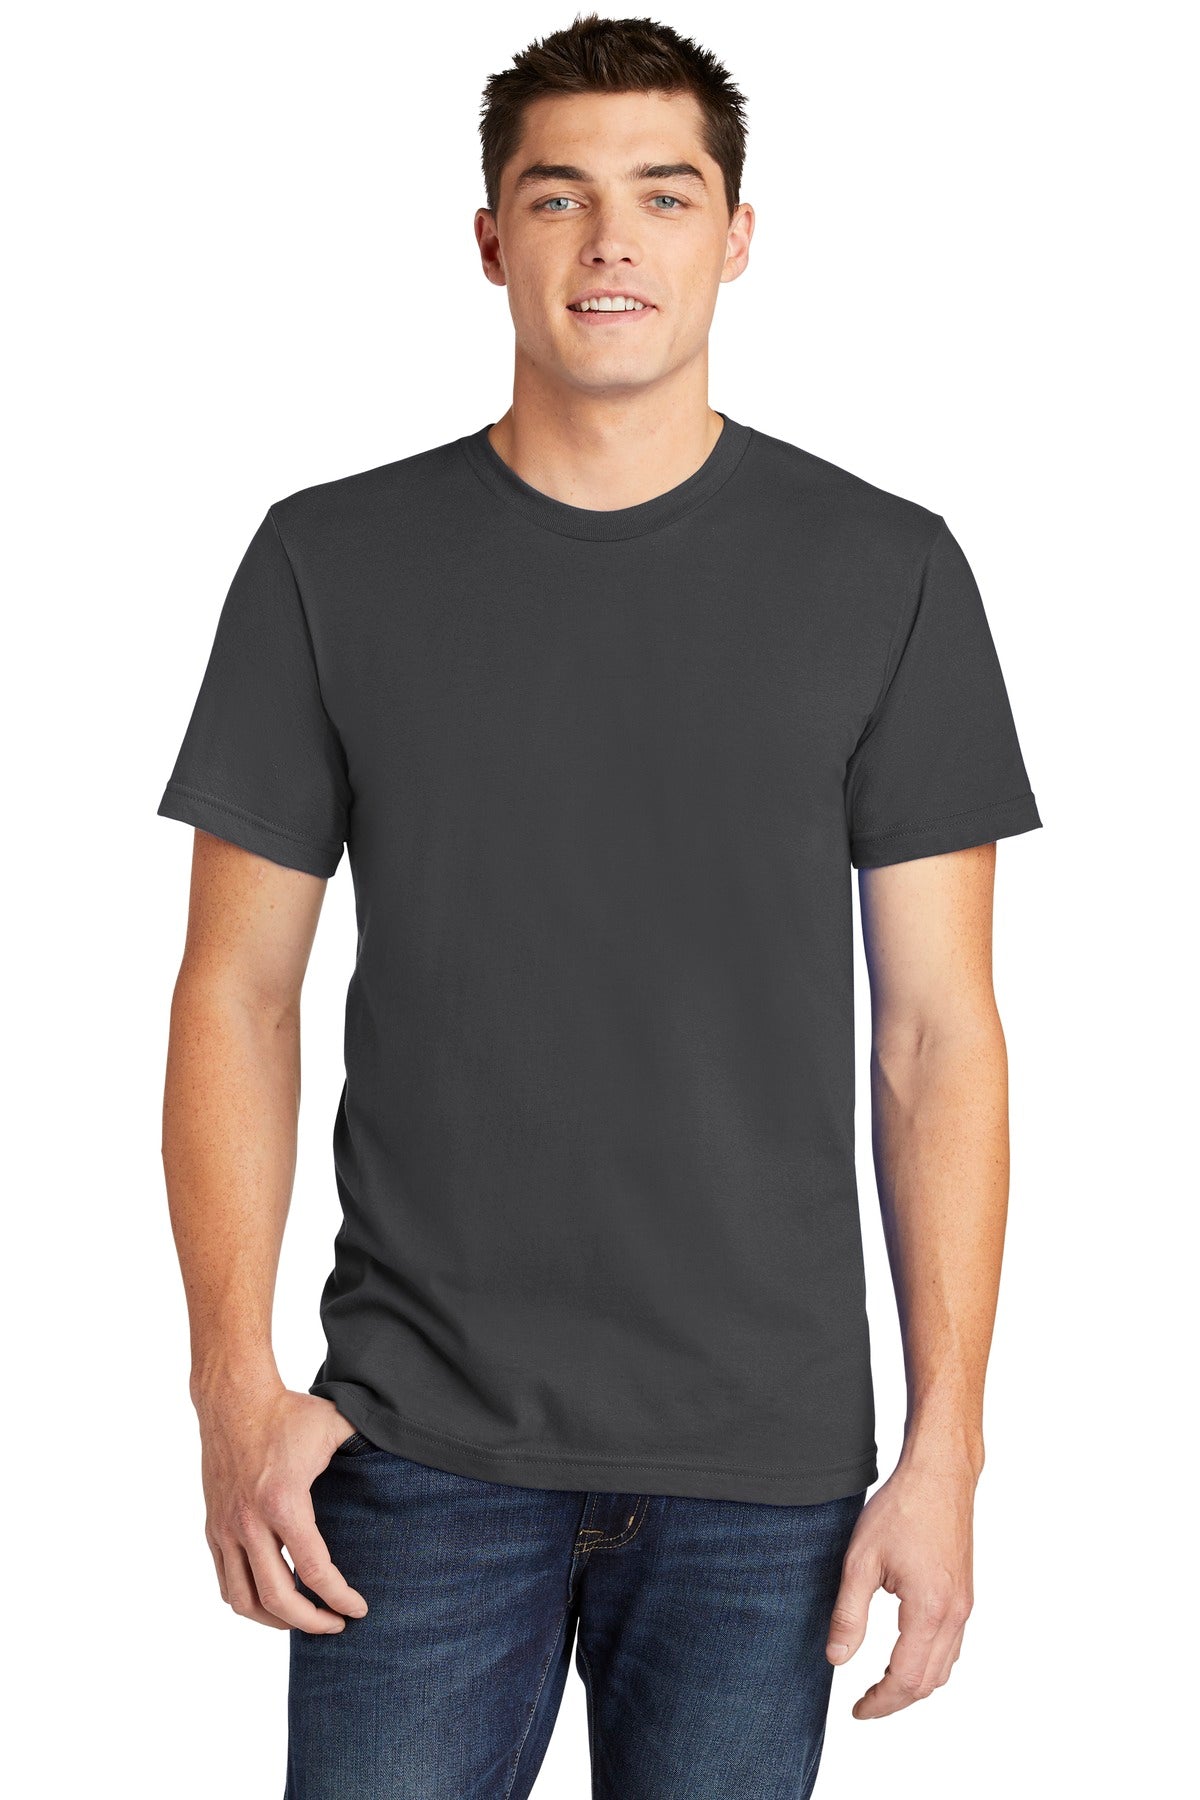 American Apparel ® Fine Jersey T-Shirt. 2001W [Asphalt] - DFW Impression